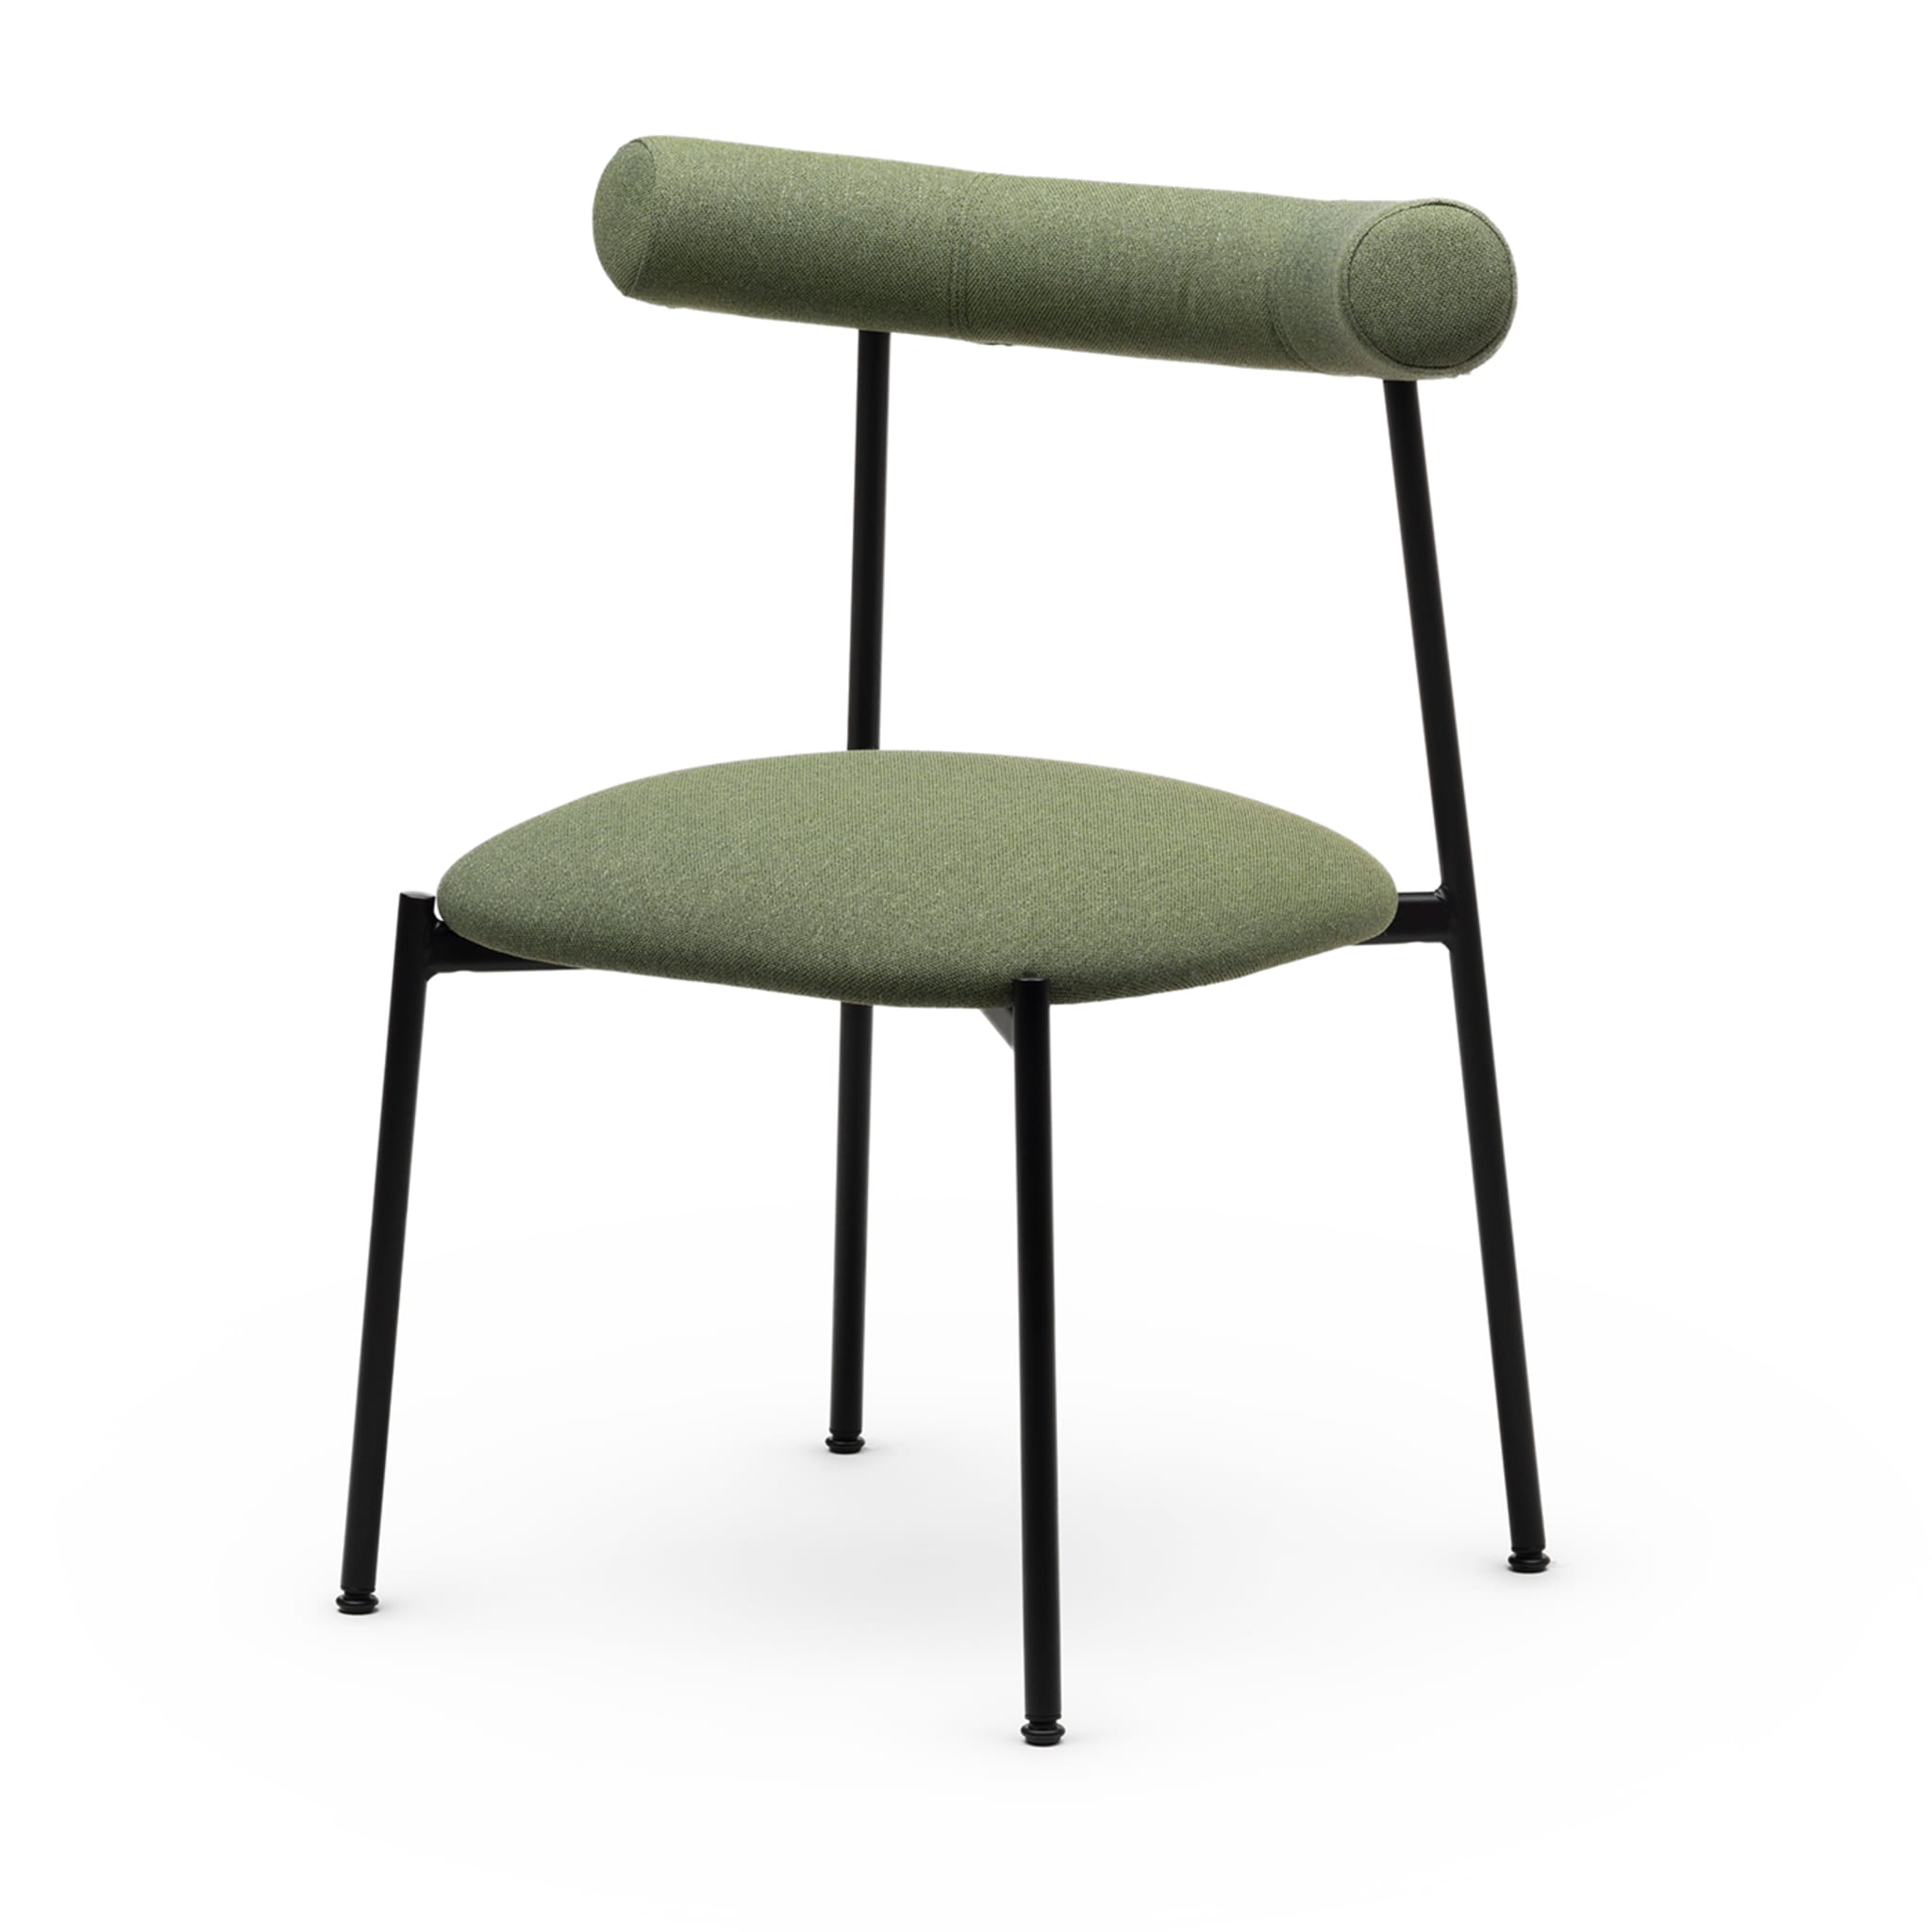 Pampa S Green & Black Chair by Studio Pastina - Alternative view 1